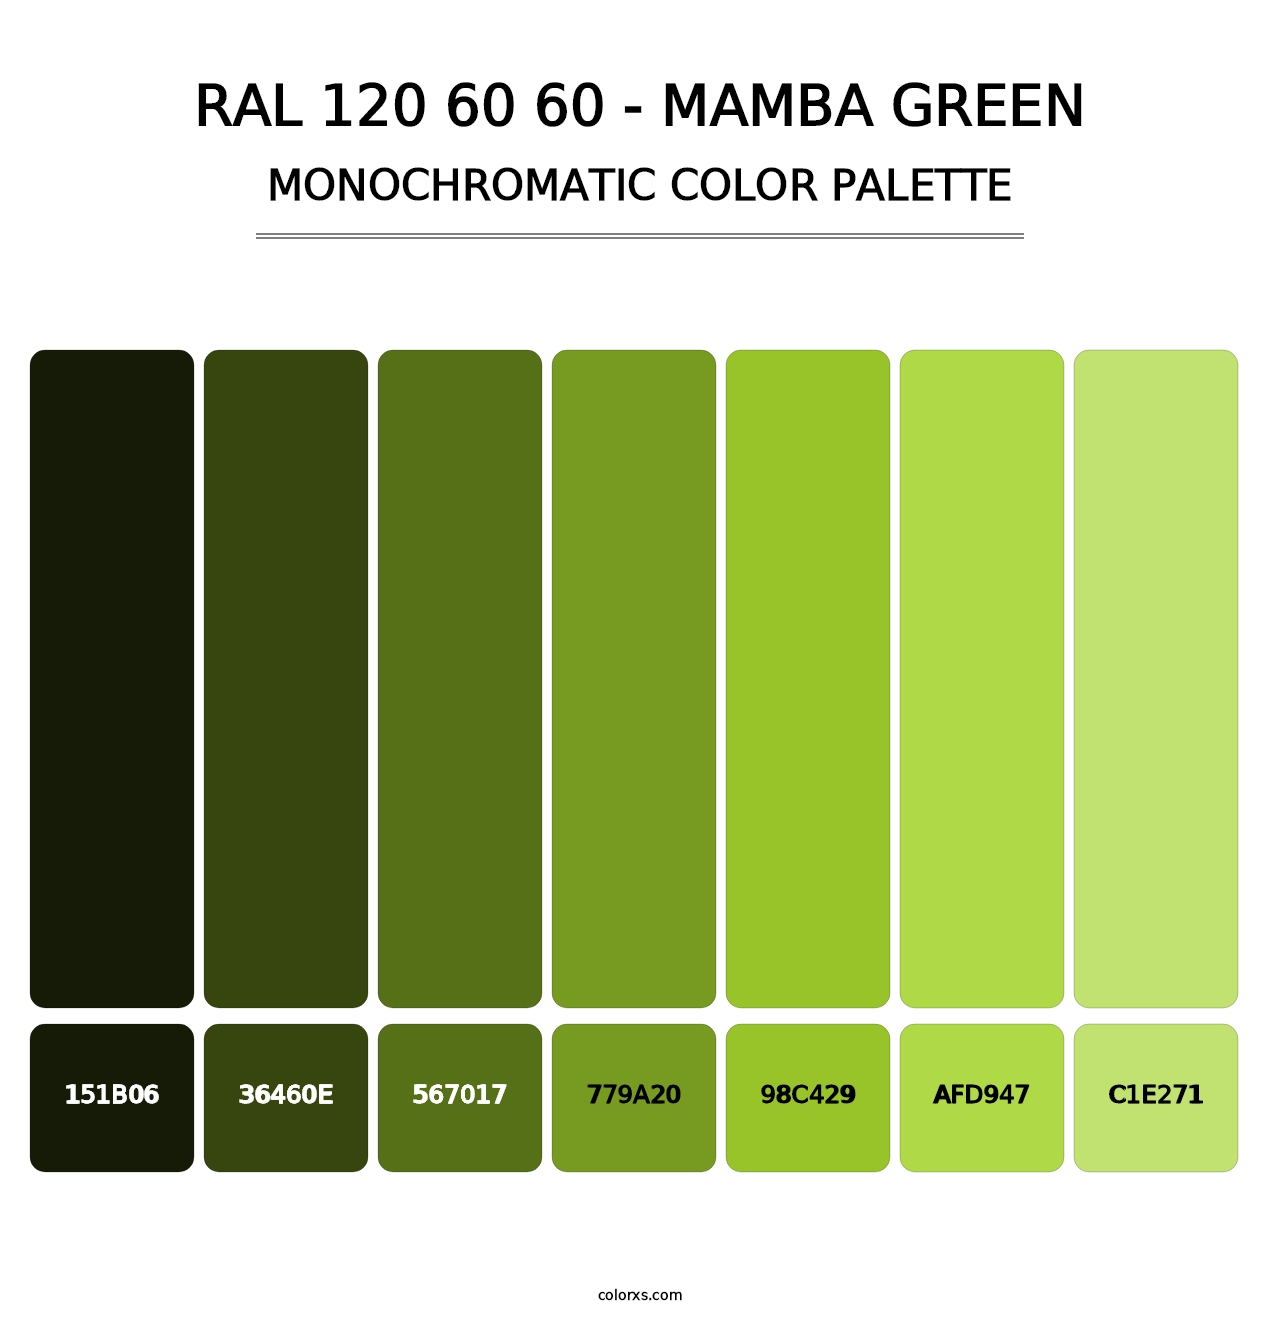 RAL 120 60 60 - Mamba Green - Monochromatic Color Palette